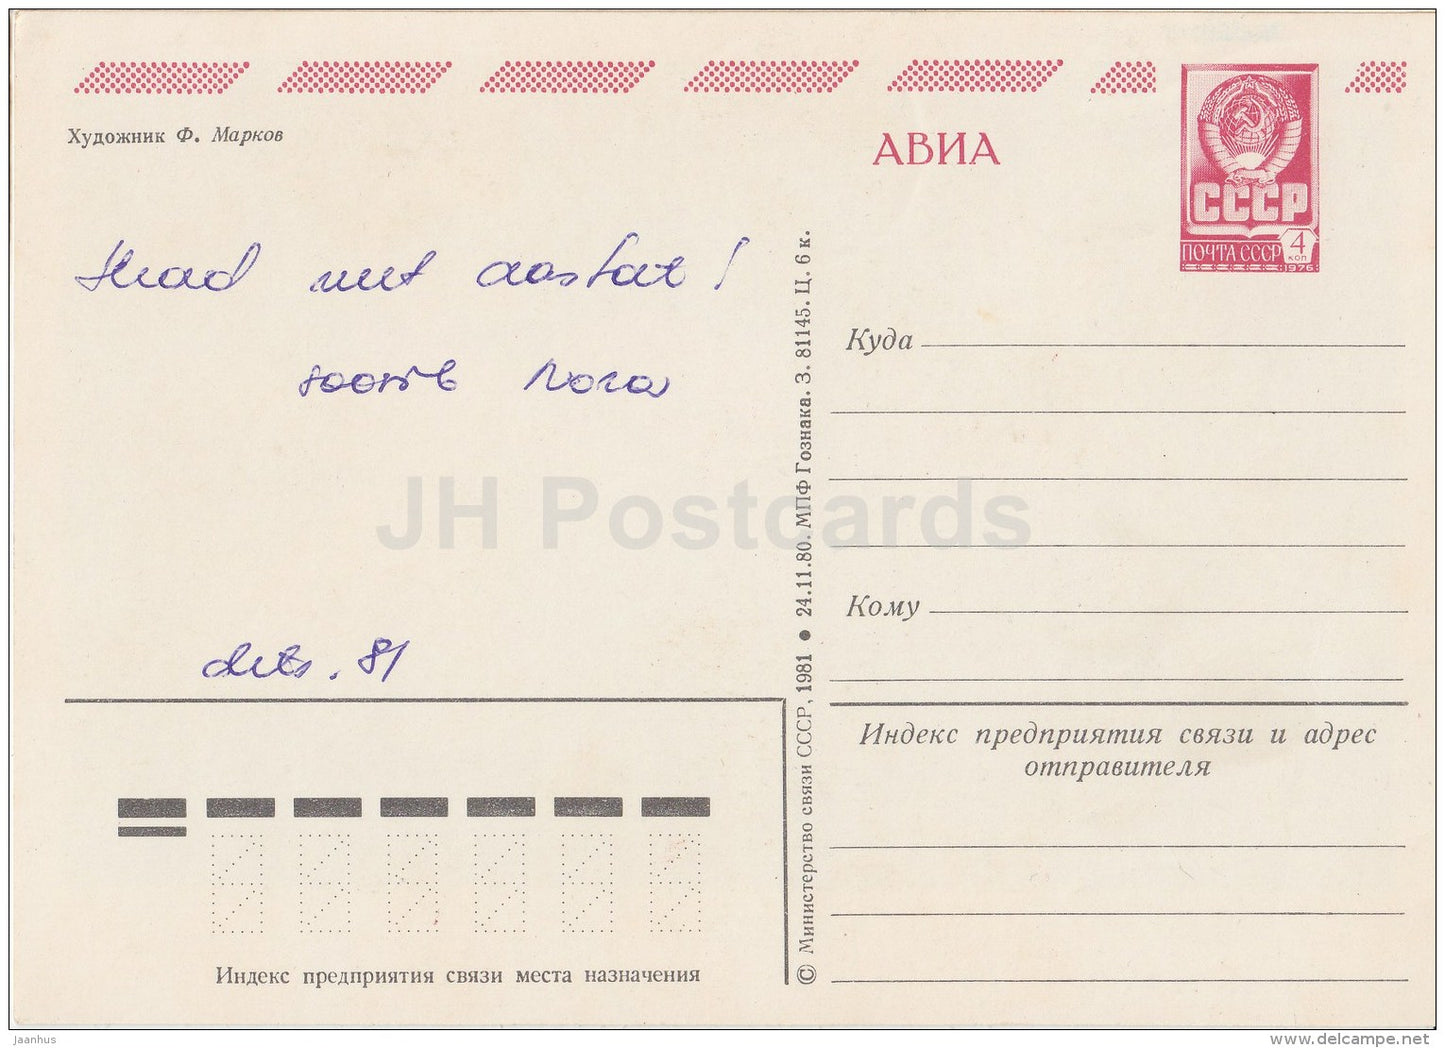 New Year Greeting Card by F. Markov - snowman - boy - sledge - AVIA - postal stationery - 1981 - Russia USSR - used - JH Postcards